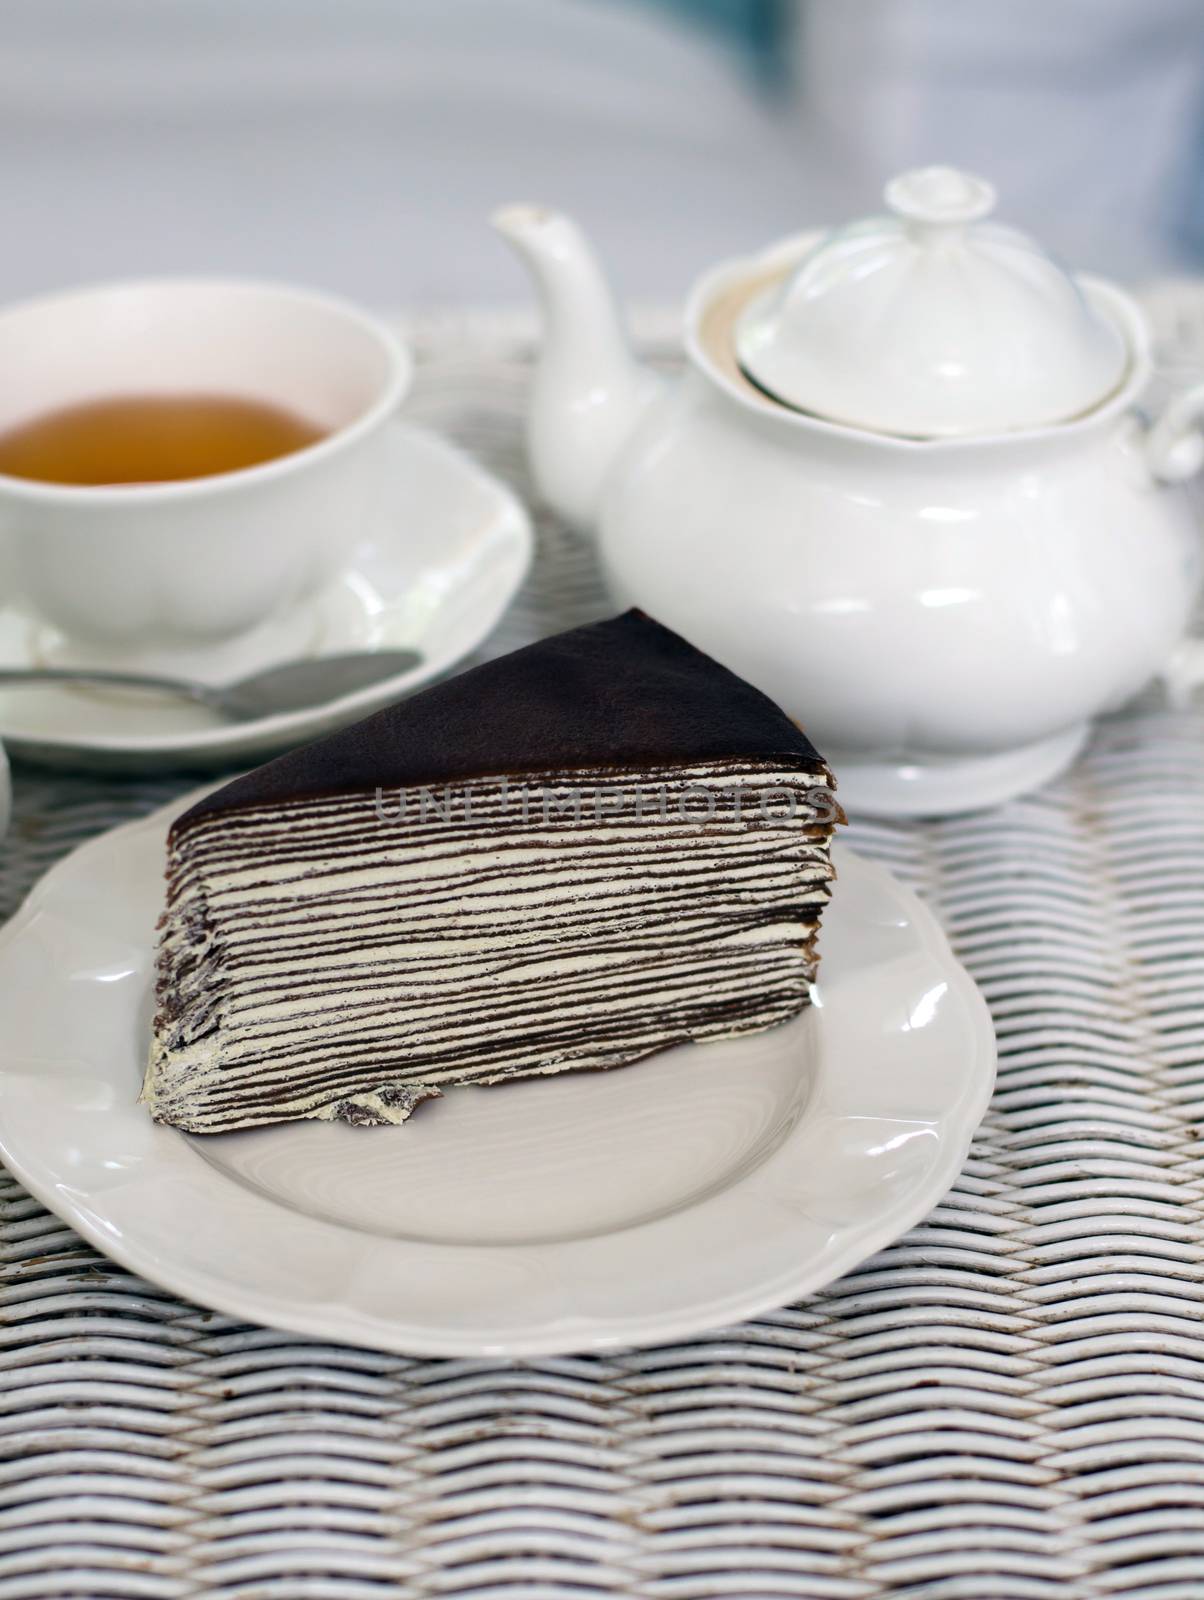 Crape cake with darjeeling tea